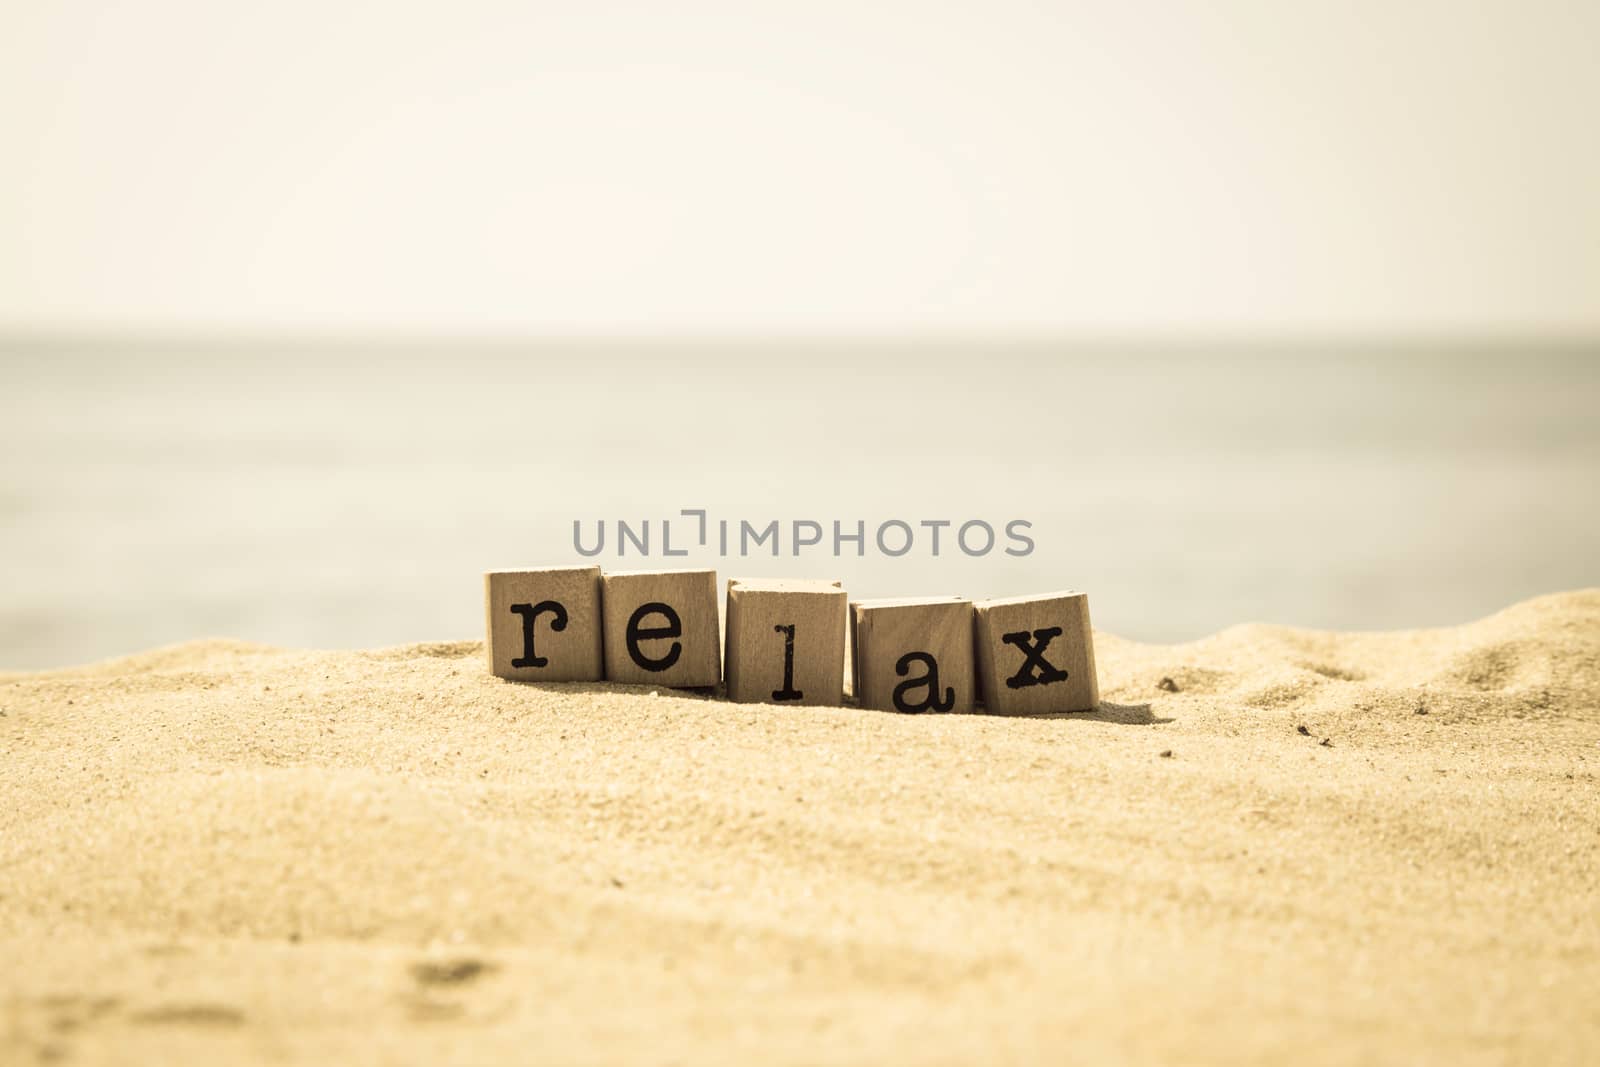 Relaxing beach break on holiday, retro style image by vinnstock